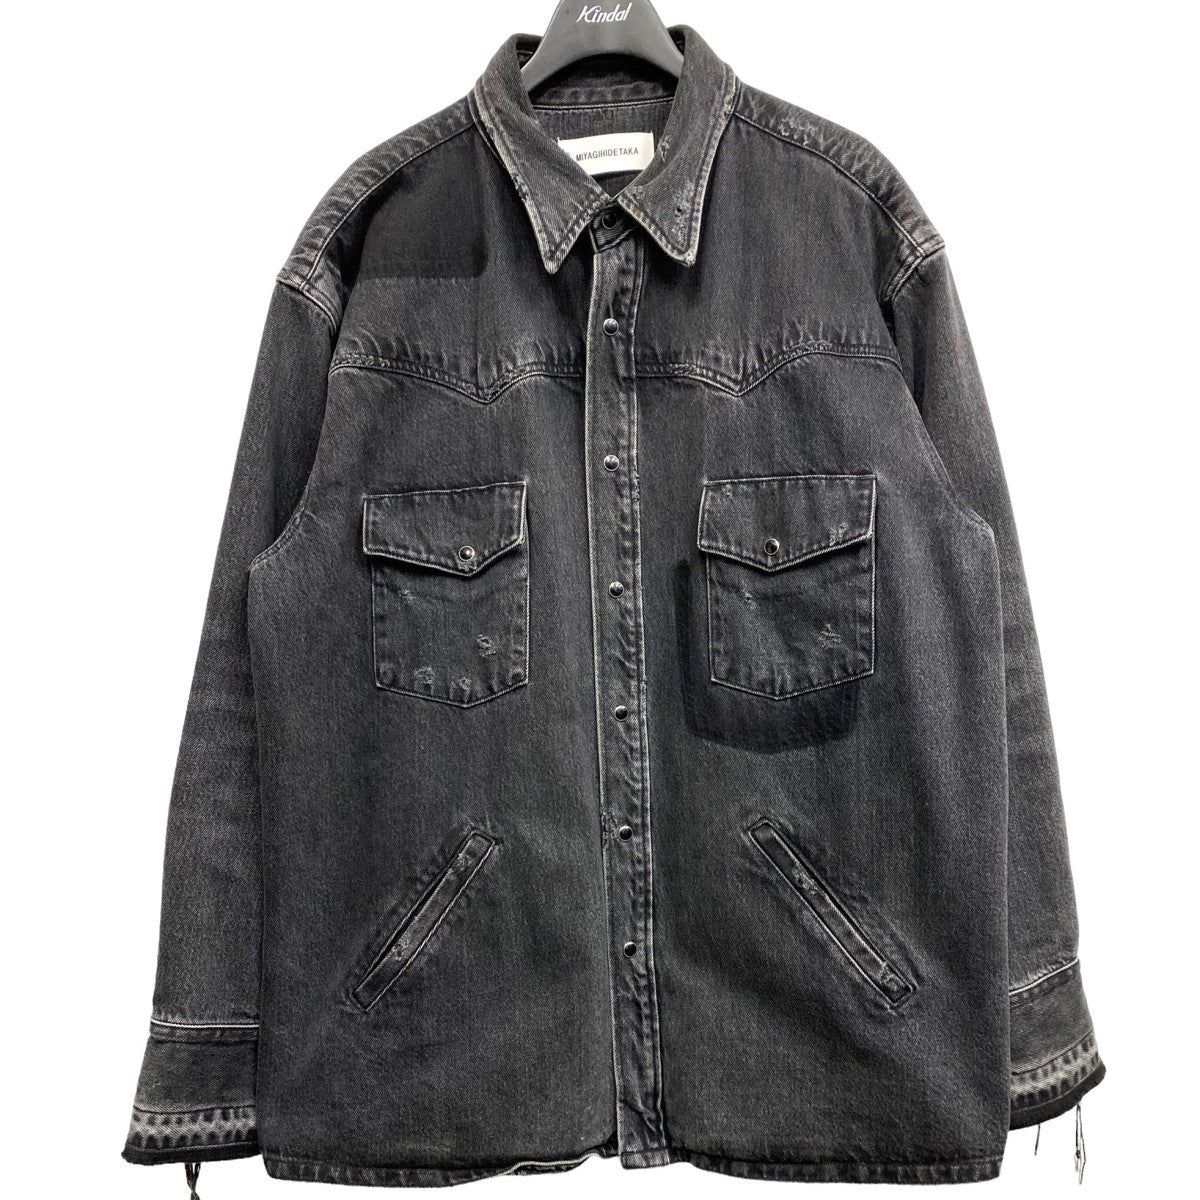 MIYAGIHIDETAKA(ミヤギヒデタカ) 20AW Black denim shirt Jacket再構築 